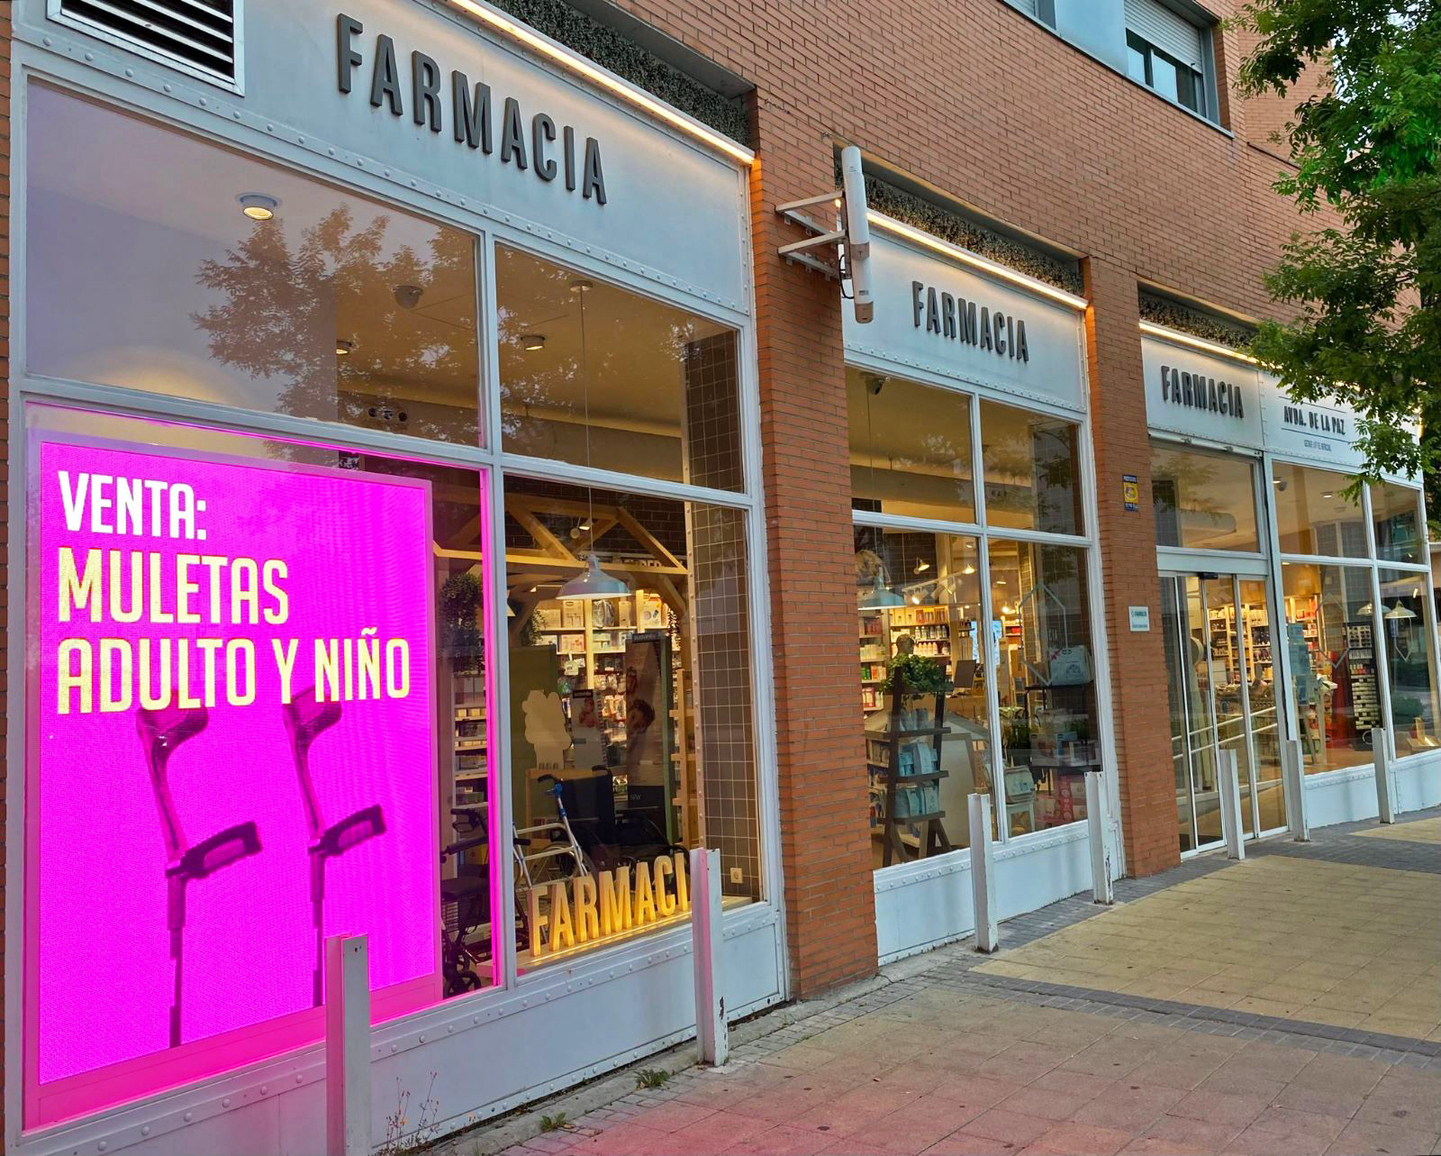 Avenida de La Paz Pharmacy in Getafe: Dynamic communication with LED screens and digital signage